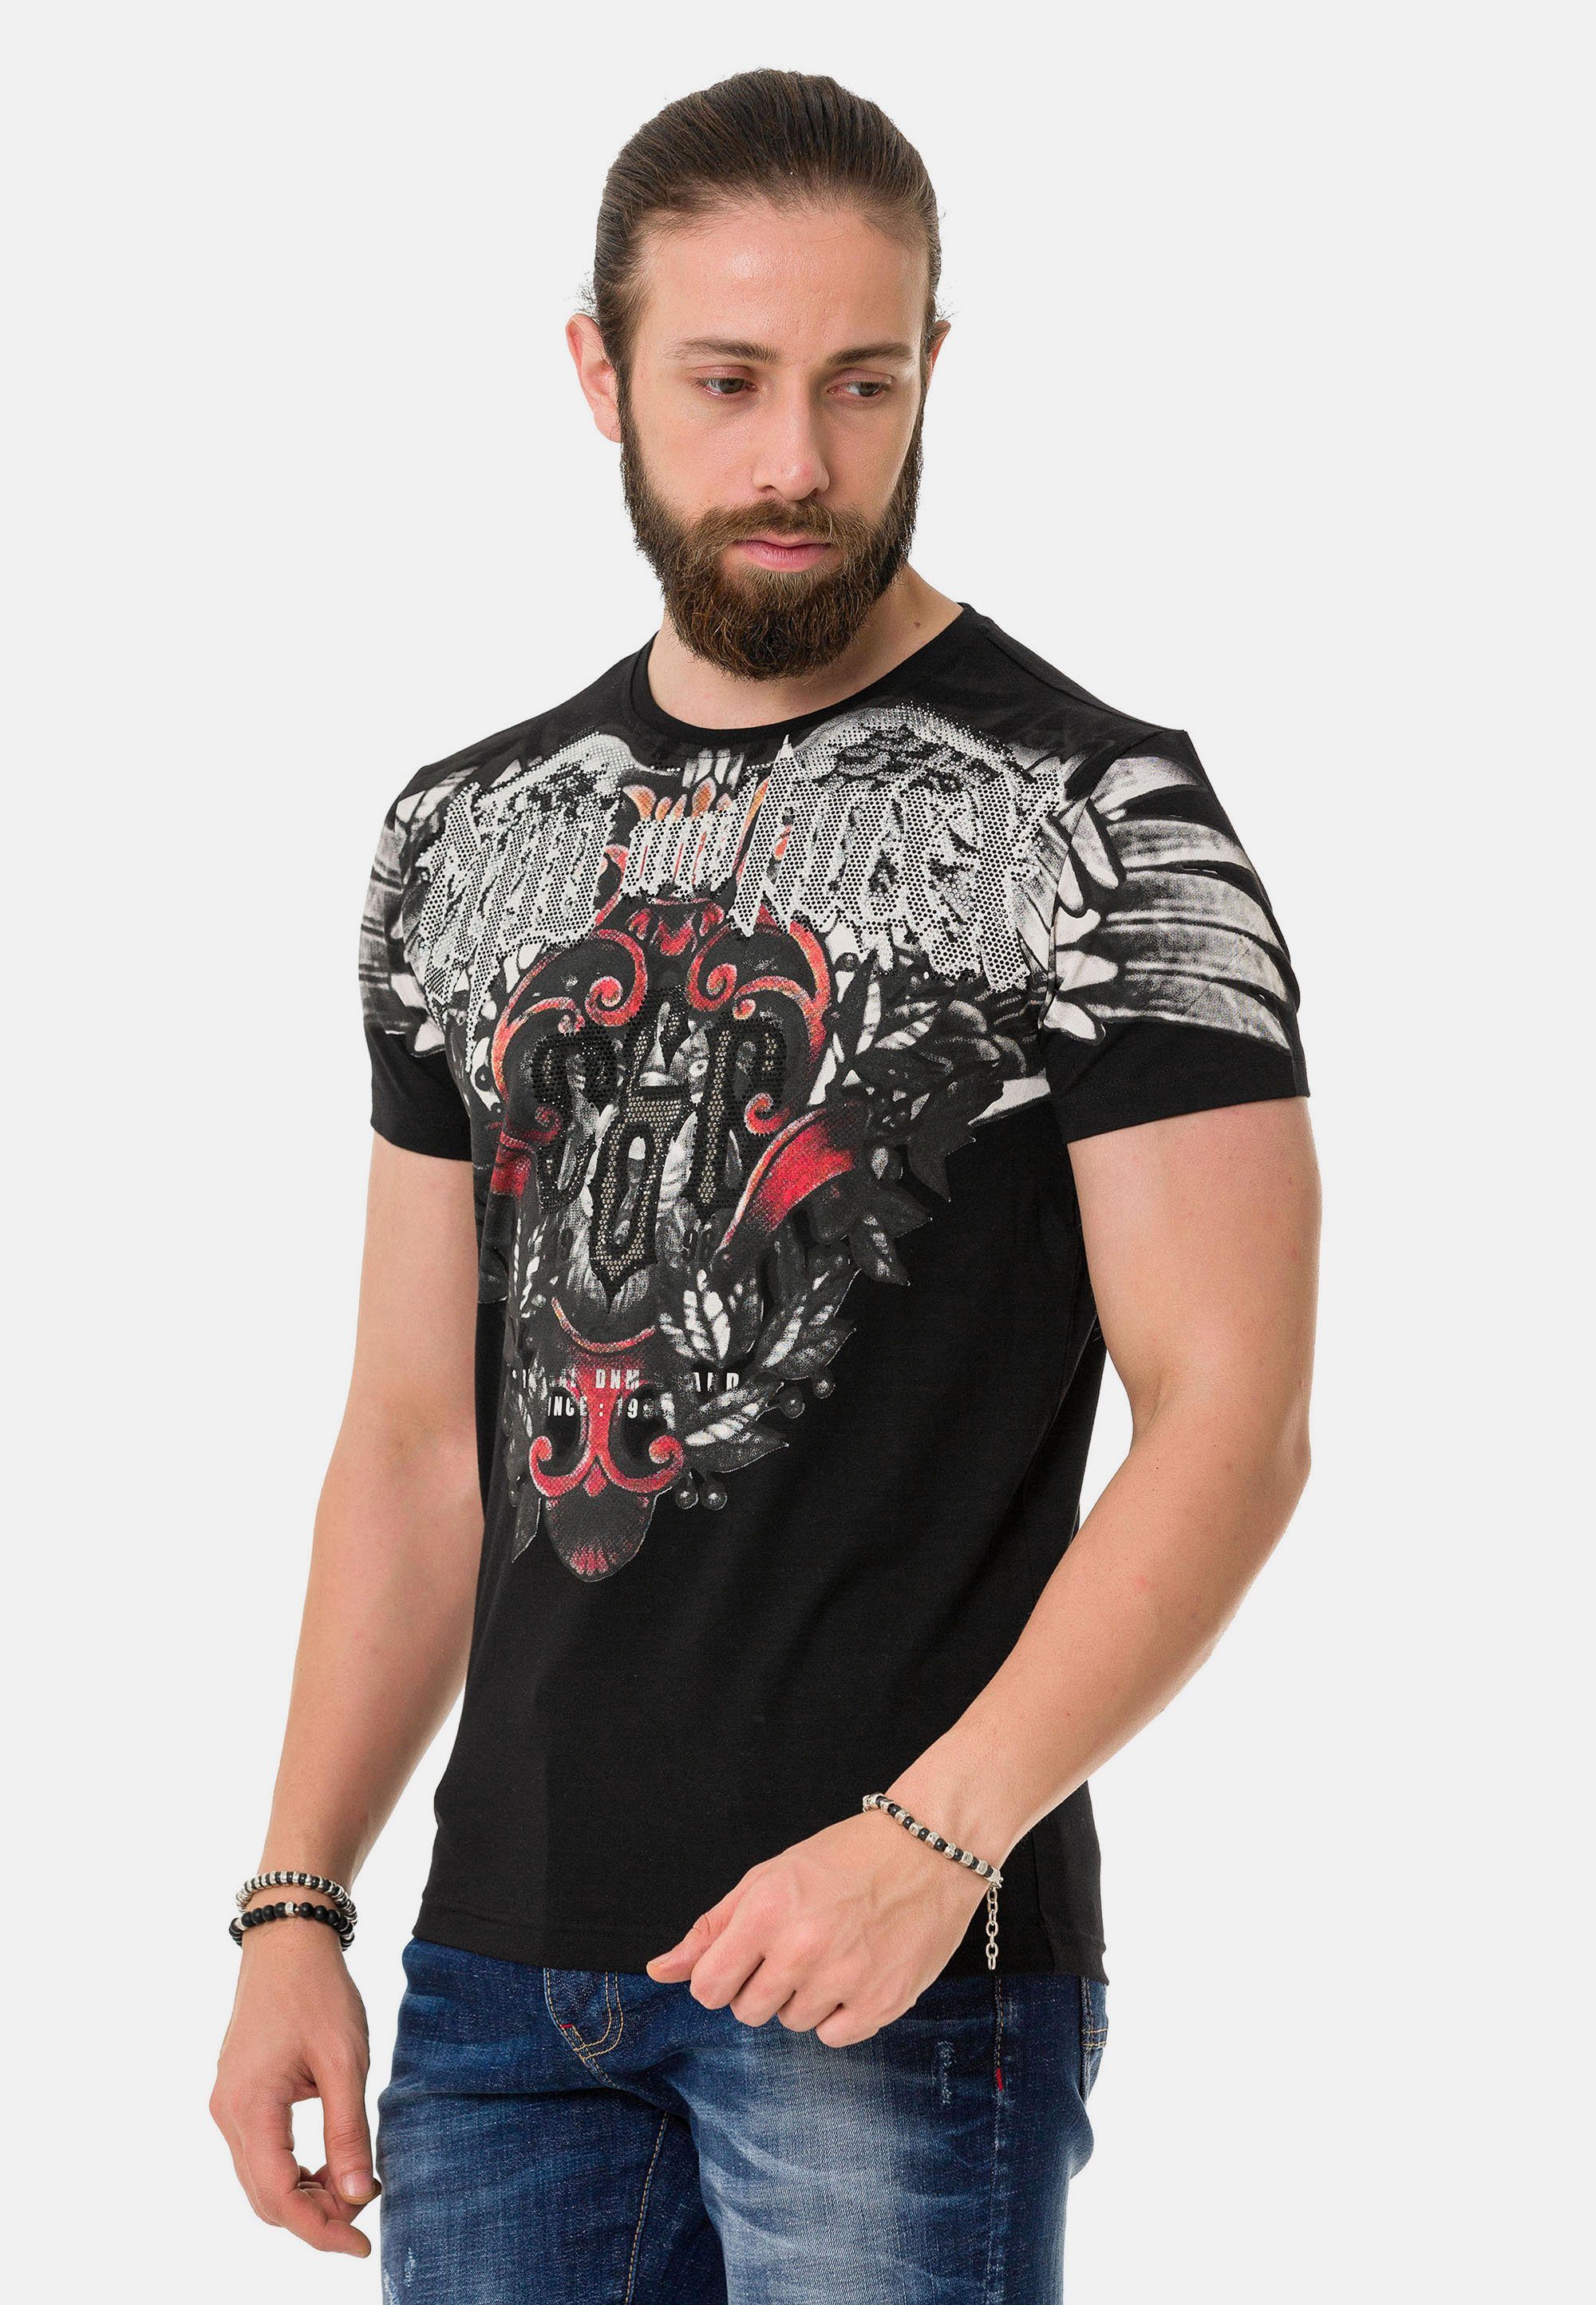 Cipo & Baxx T-Shirt in schwarz rockigem Look